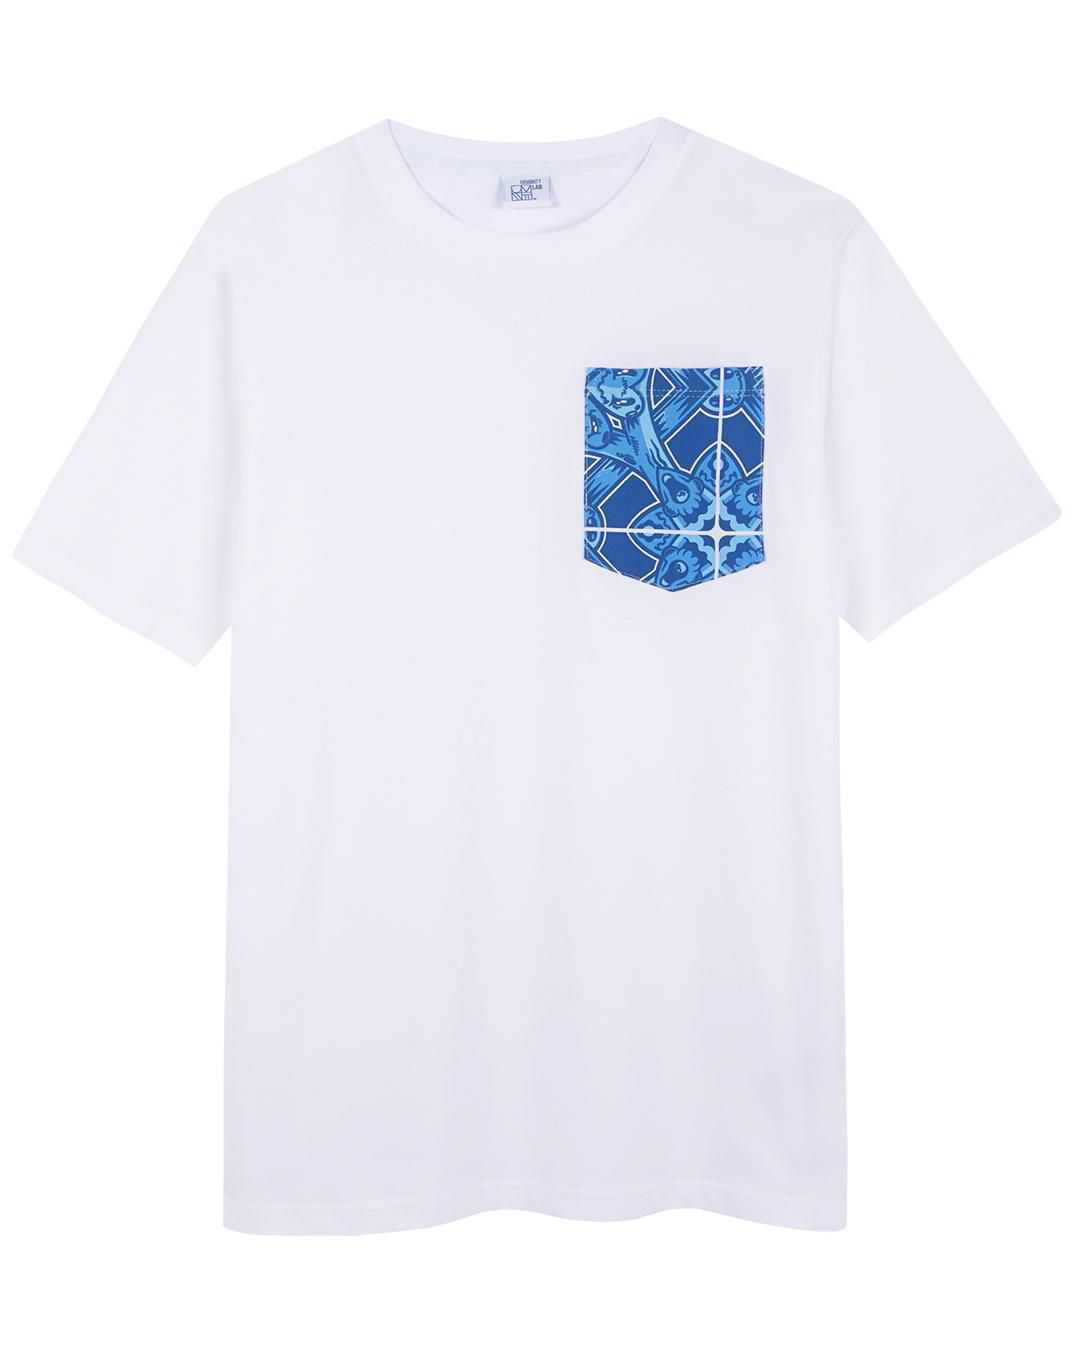 T-Shirt AZ366 (DUALISM) Limited Edition